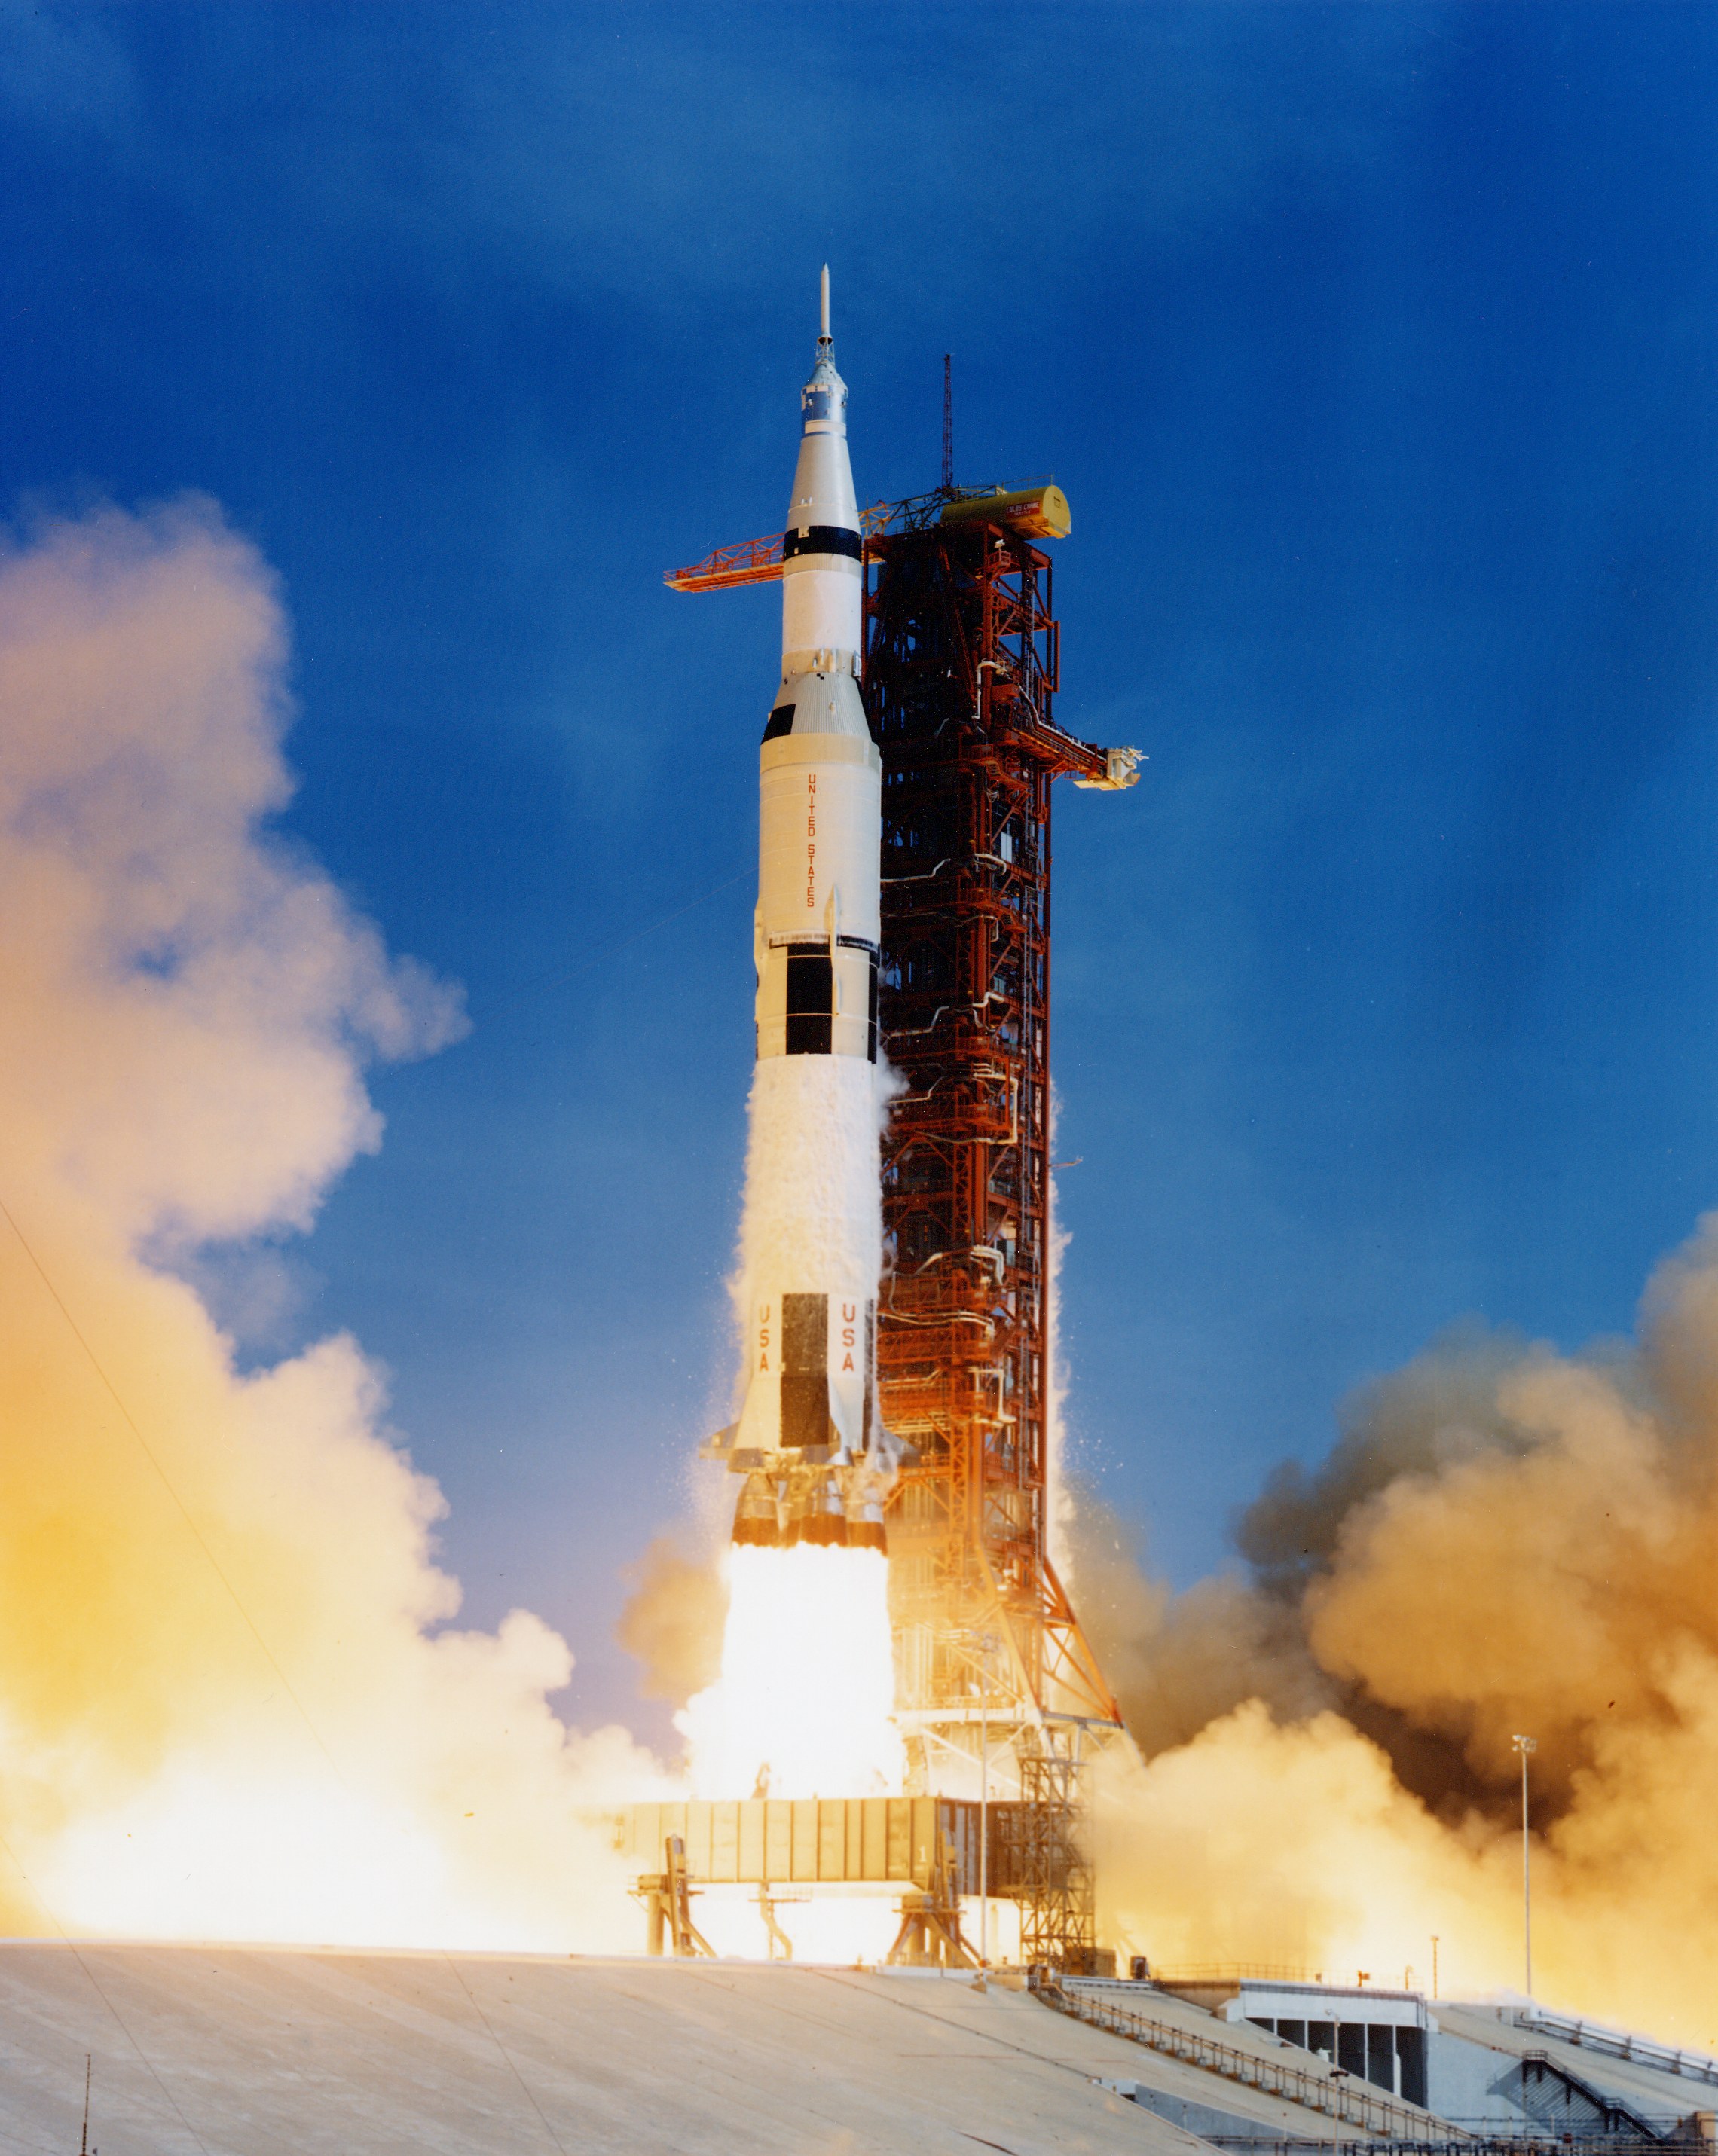 Ficheiro:Apollo 11 Saturn V lifting off on July 16, 1969.jpg ...